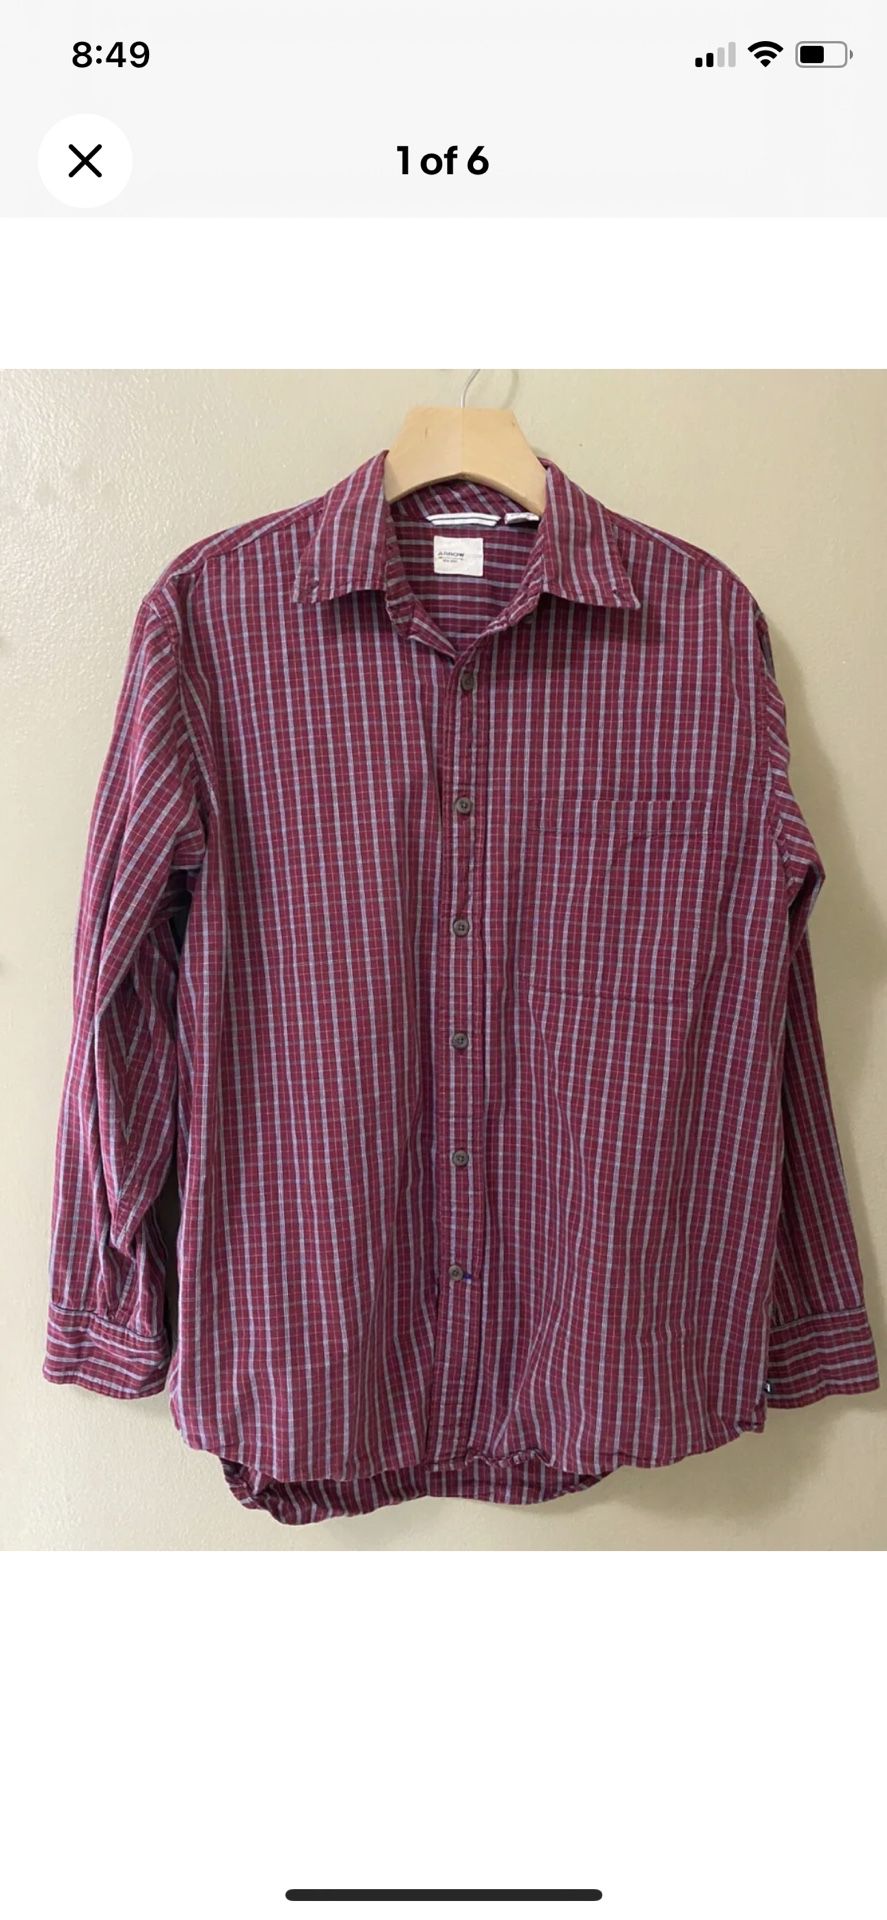 Men's ARROW Long Sleeve Button-Down Dress Shirt Maroon Red Check Plaid Size M